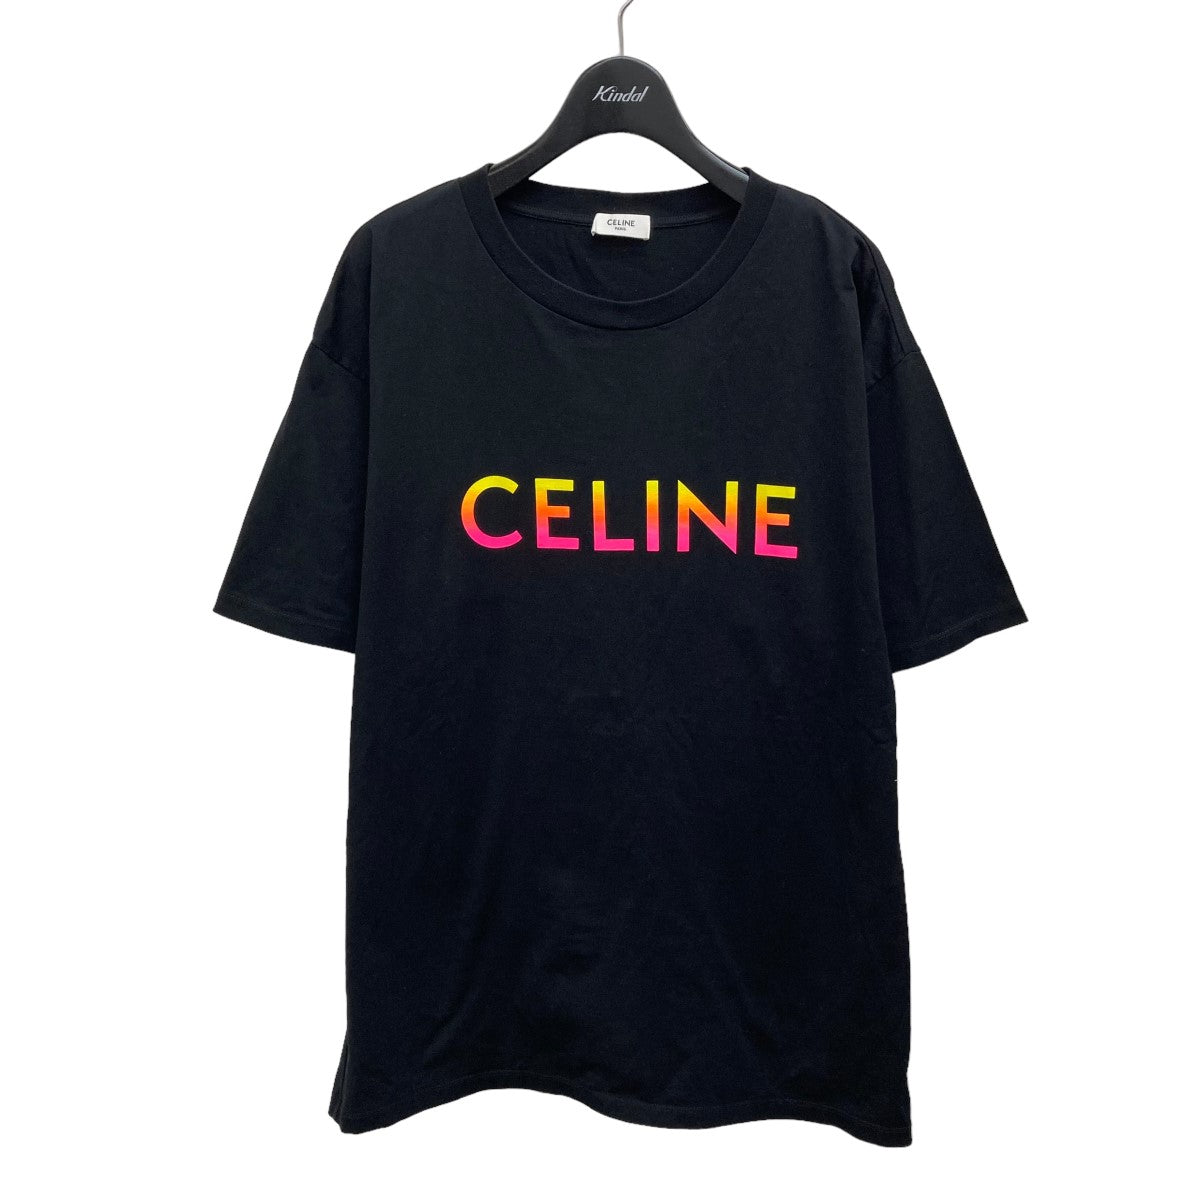 CELINE(セリーヌ) ロゴT Tシャツ 2X10B671Q 2X10B671Q ブラック サイズ M｜【公式】カインドオルオンライン  ブランド古着・中古通販【kindal】